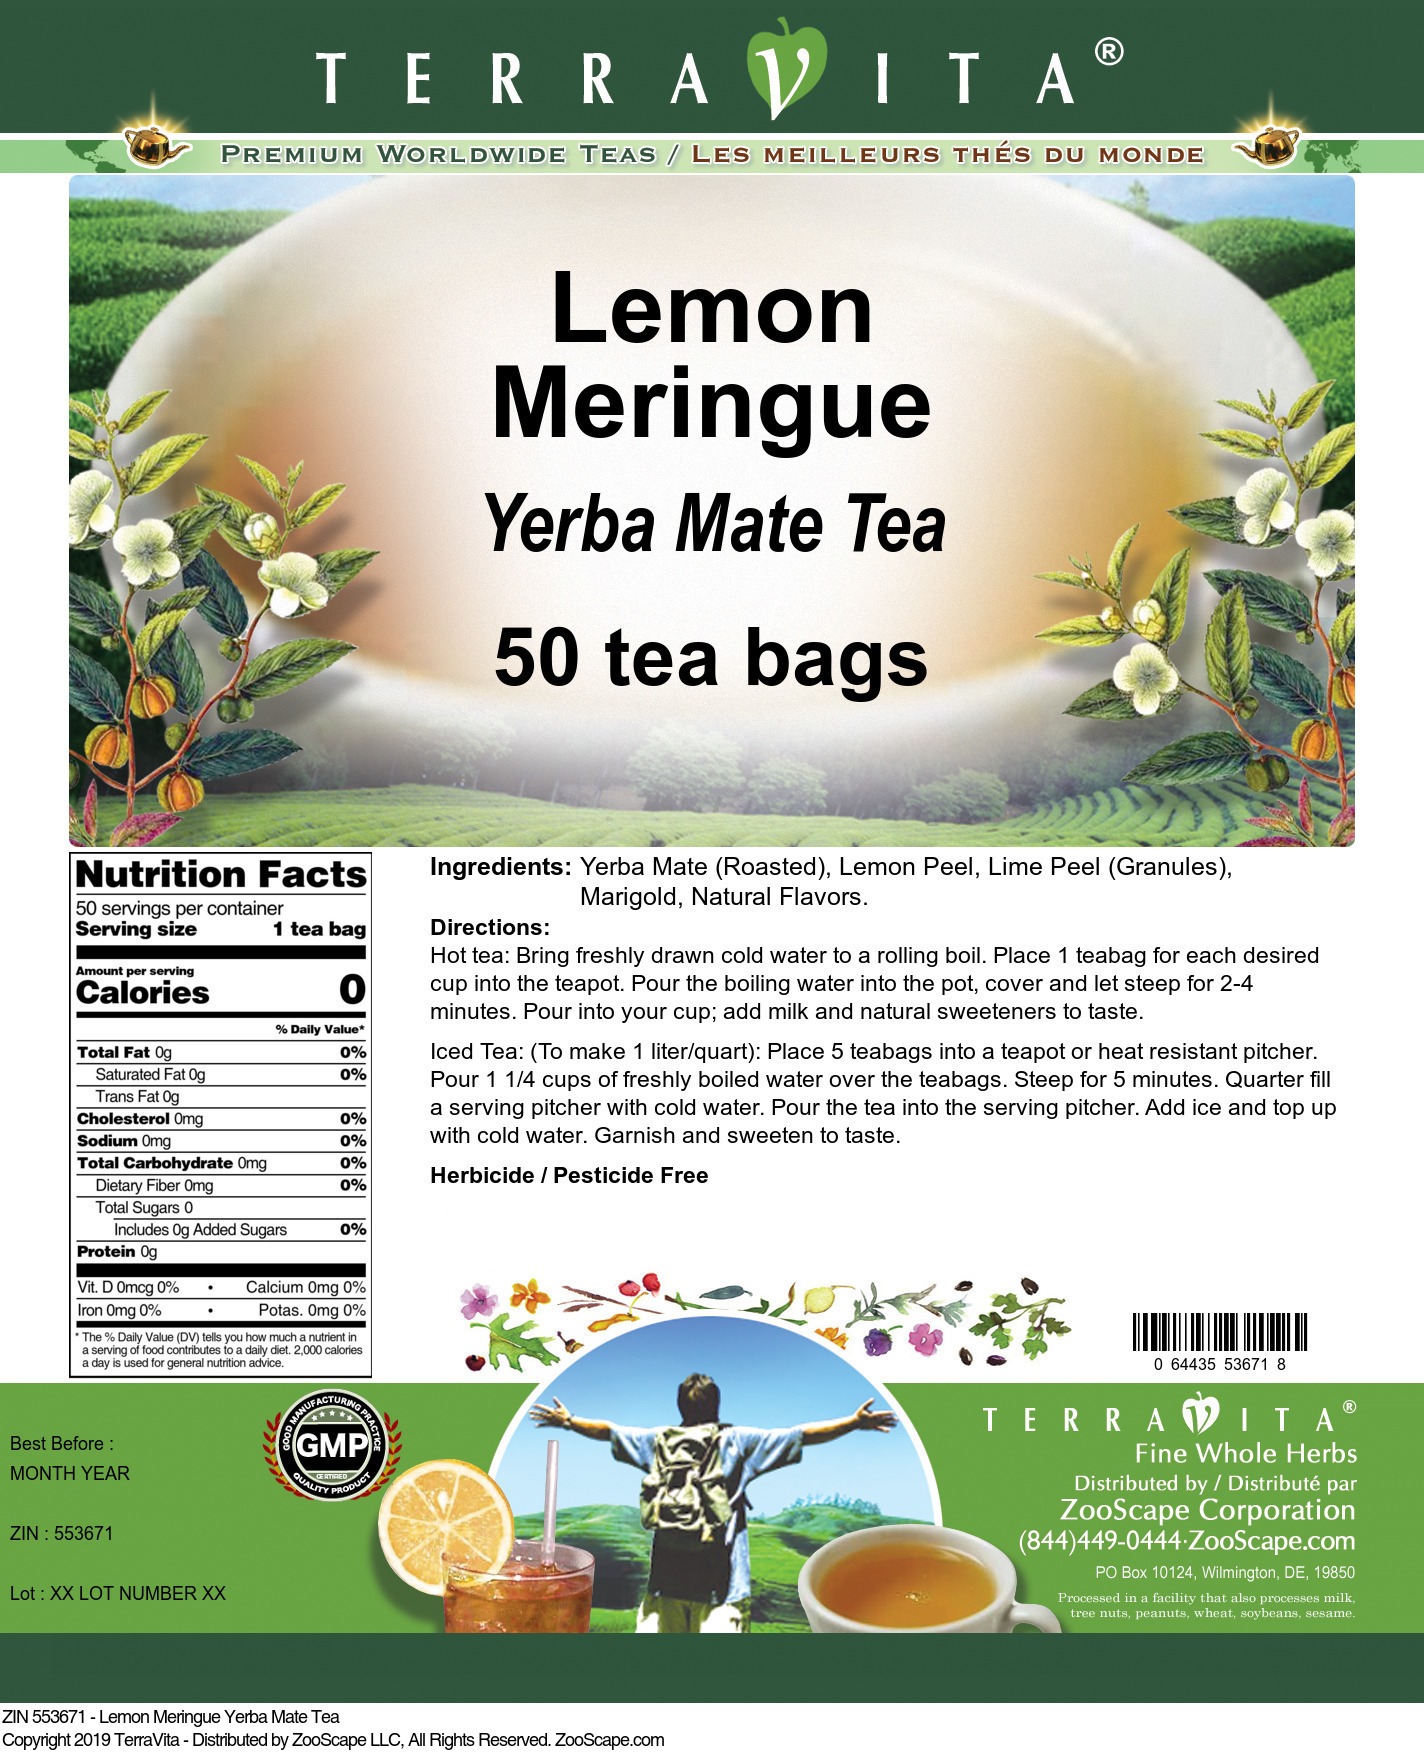 Lemon Meringue Yerba Mate Tea - Label